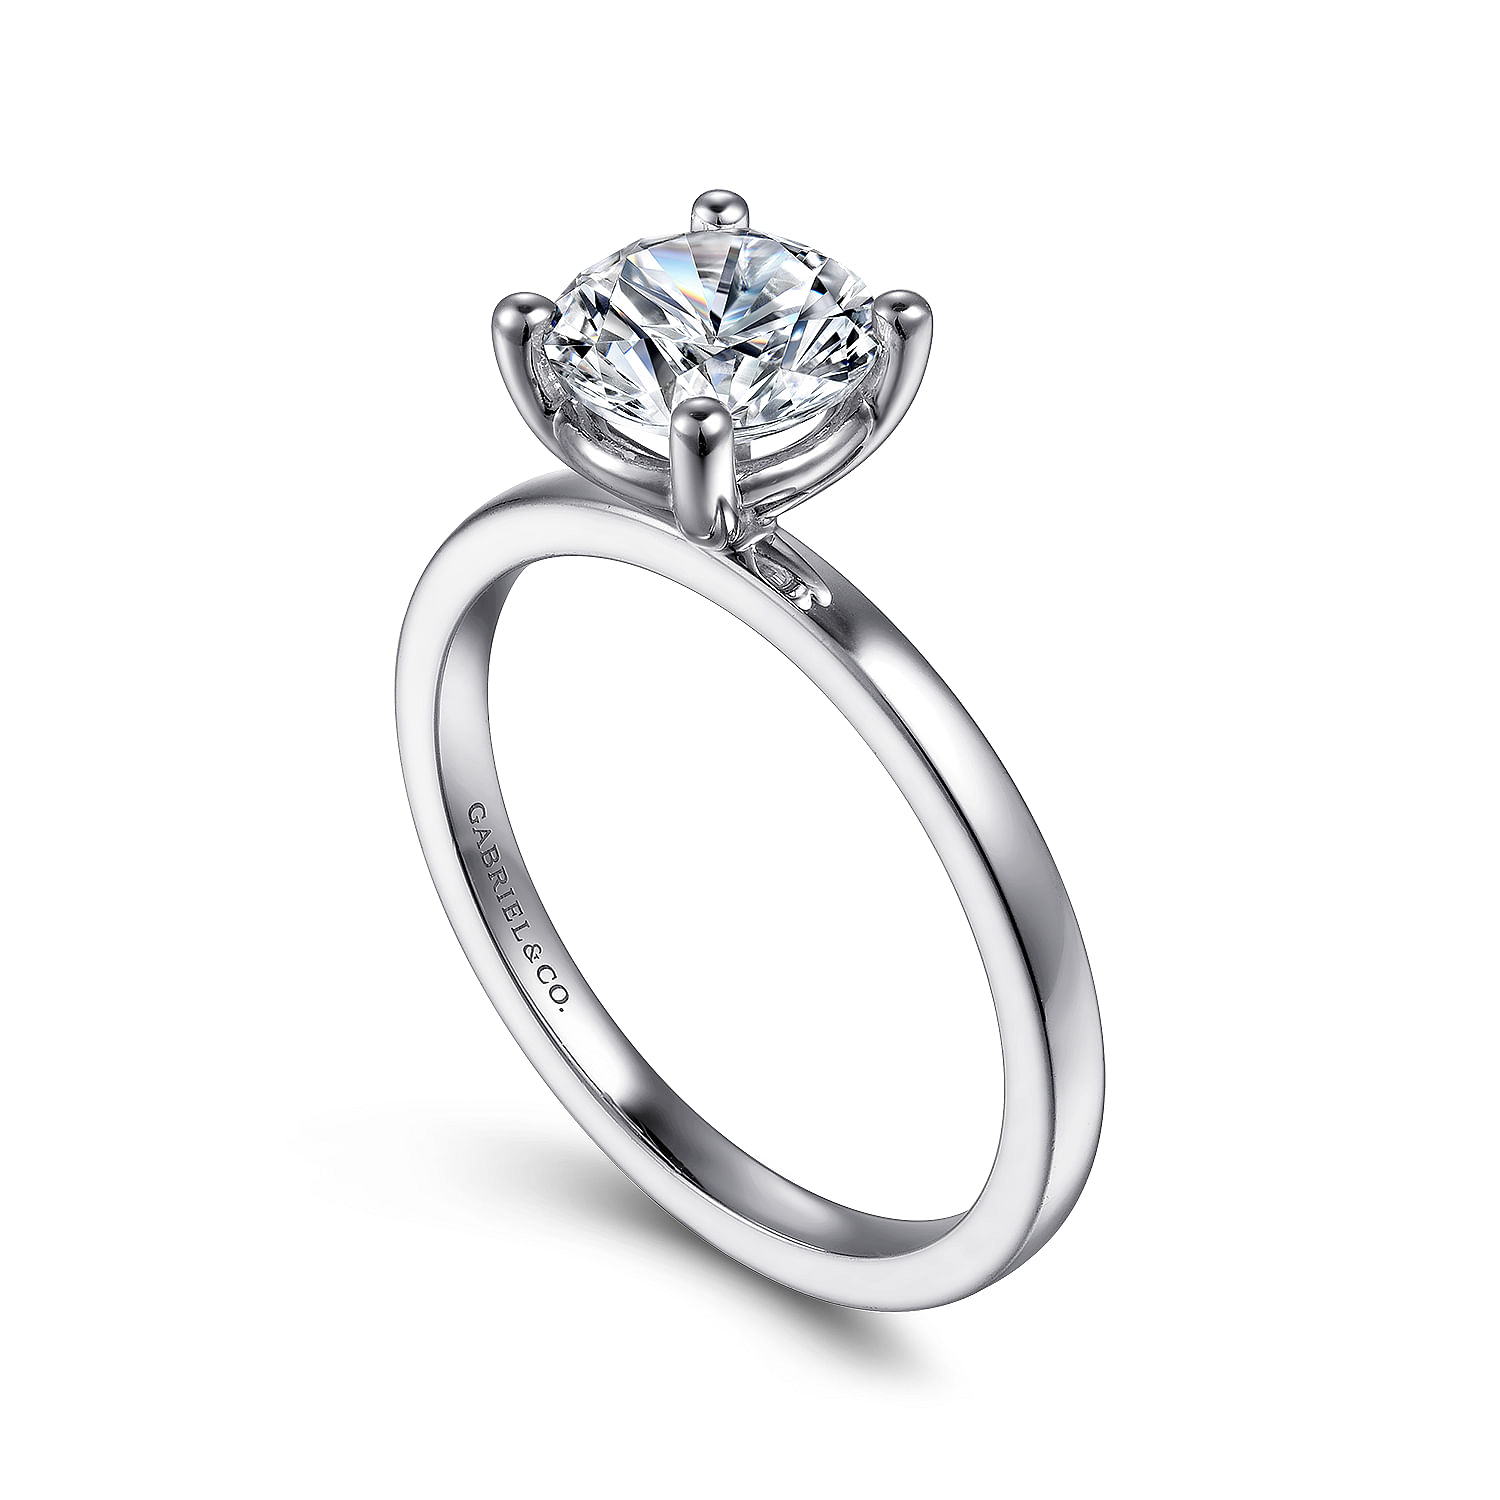 Paula - 14K White Gold Round Diamond Engagement Ring - Shot 3